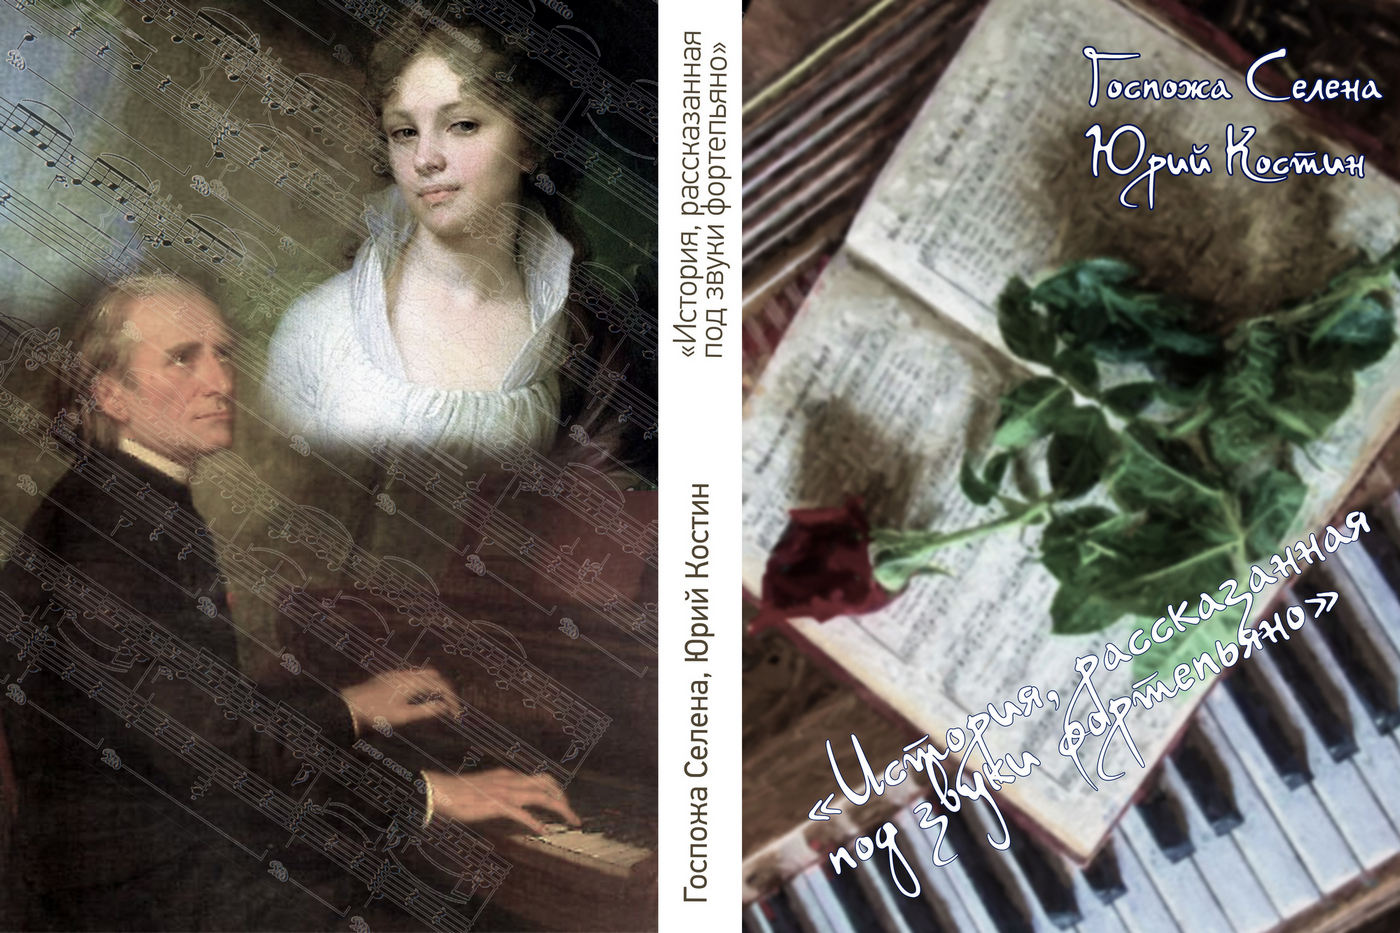 Кристина Хендрикс Примеряет Платья У Зеркала – Кухня (2007) (2007)